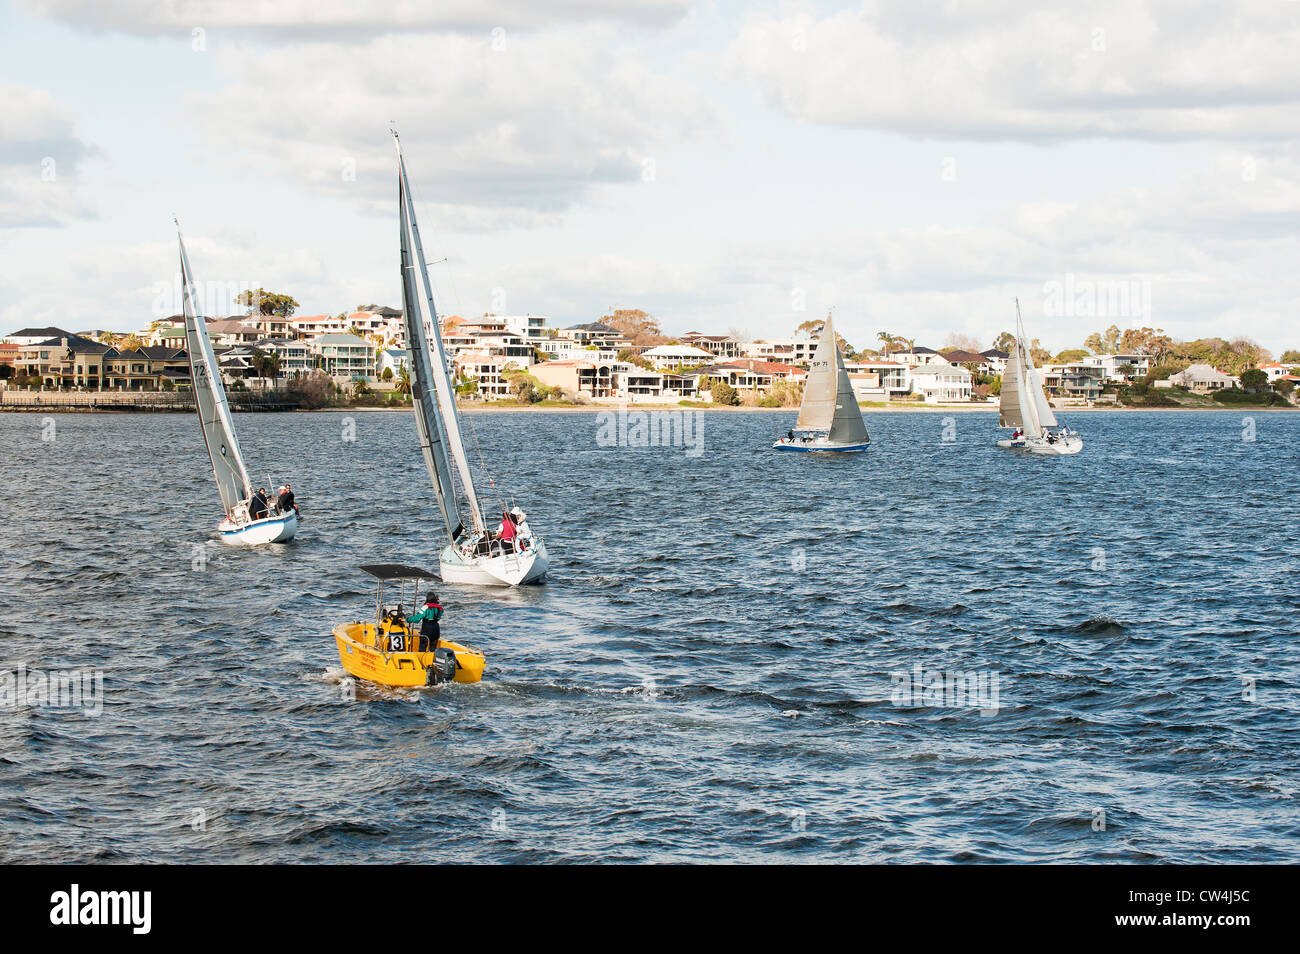 Swan River Western Australia - Sailboats racing on the Swan River in Perth, Western Australia. Stock Photo